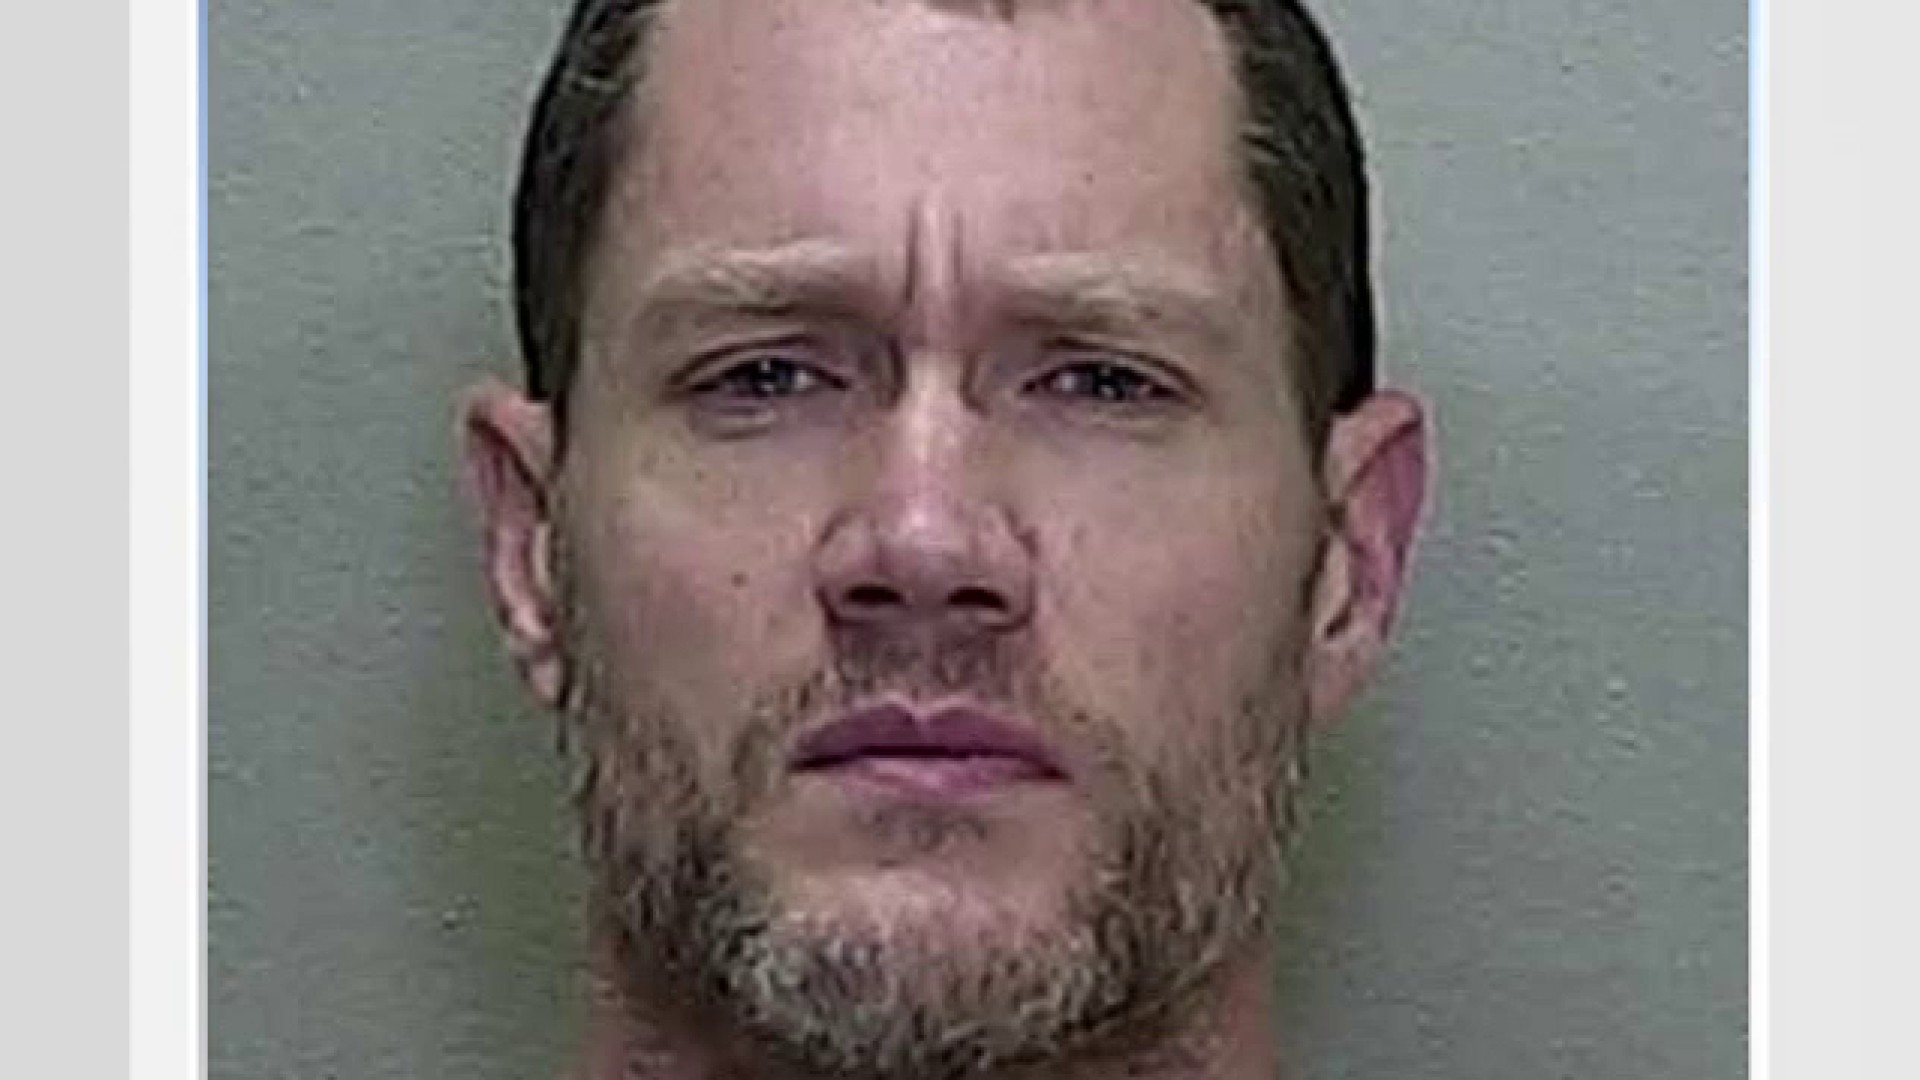 12 Yard Sex Video Com - Husband of missing Mount Dora woman arrested in child porn case